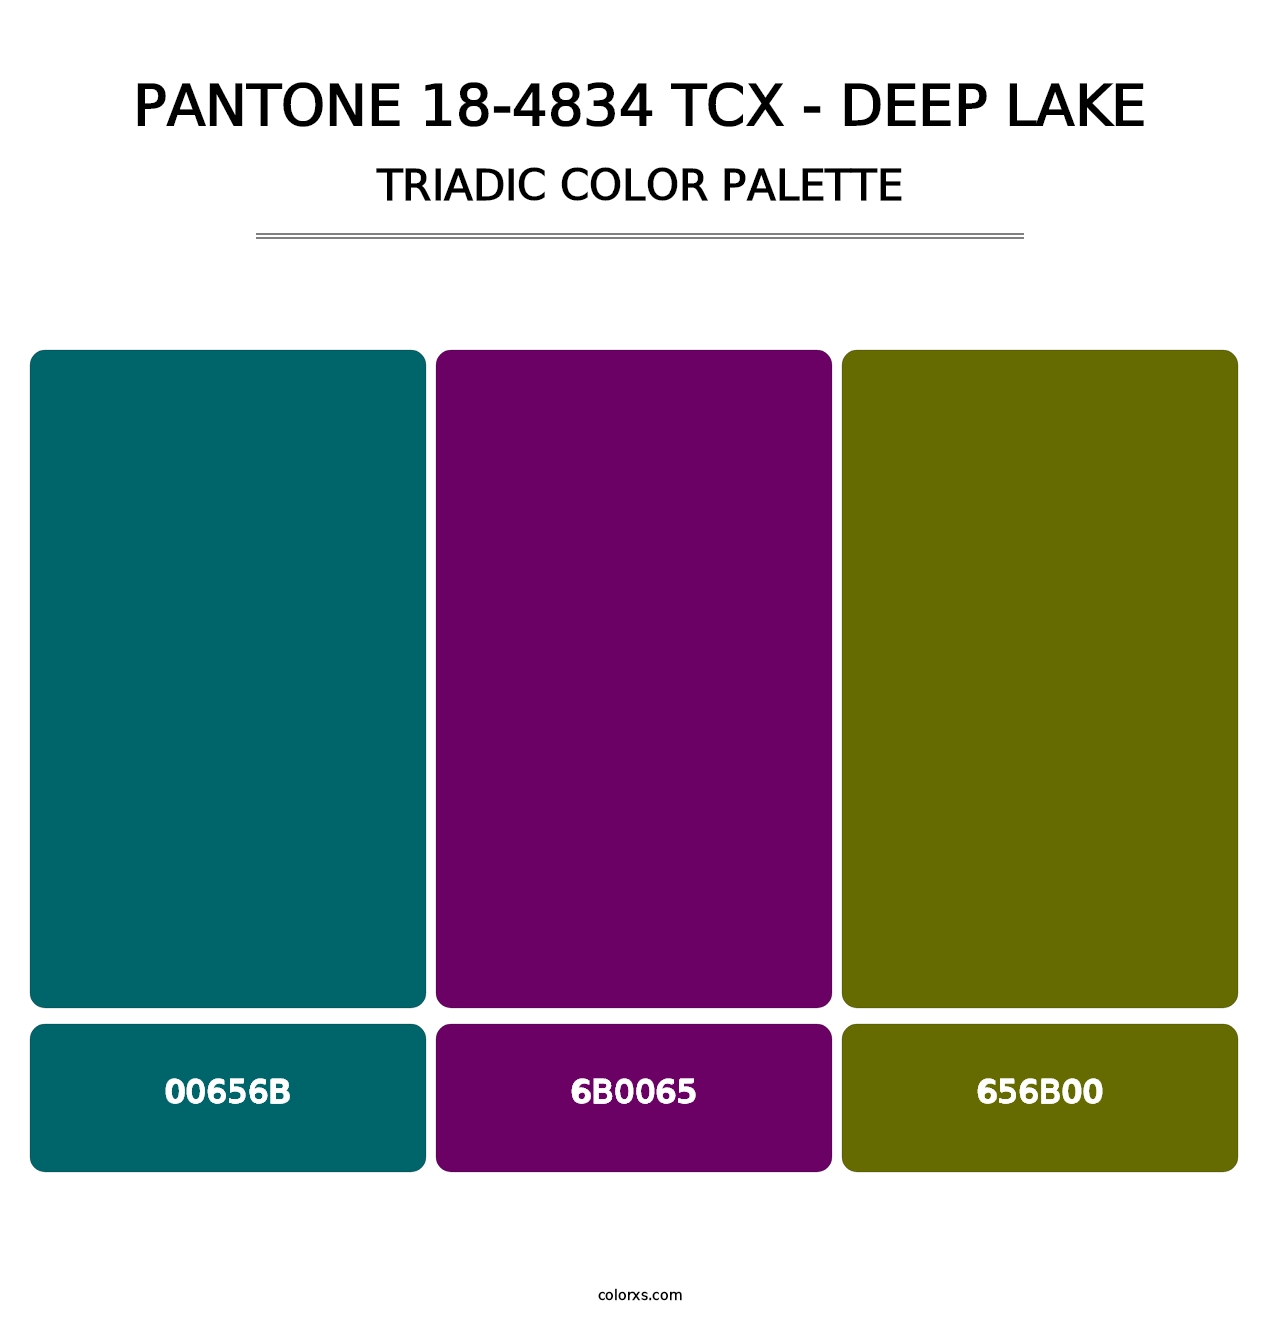 PANTONE 18-4834 TCX - Deep Lake - Triadic Color Palette